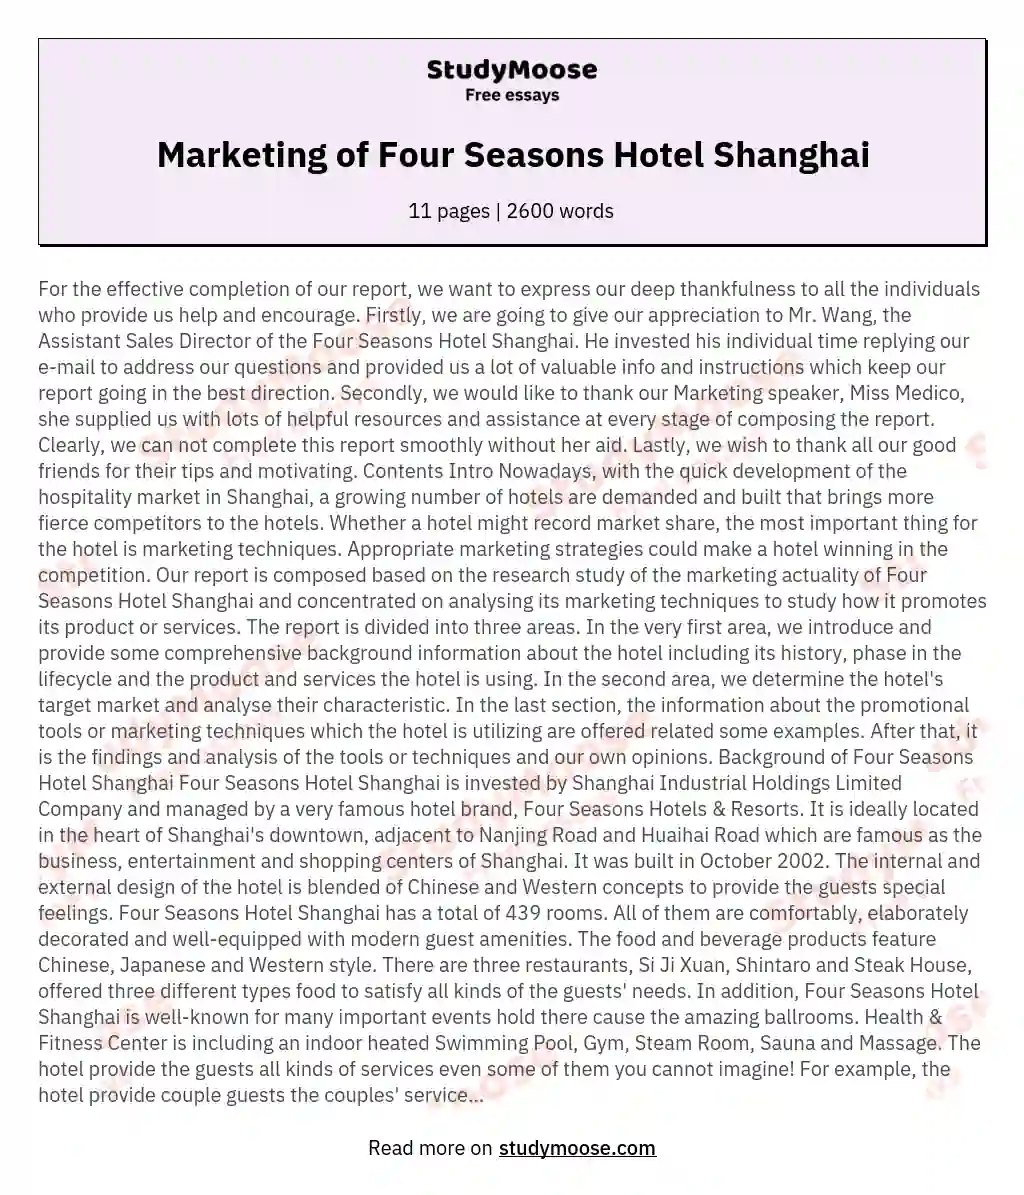 Marketing of Four Seasons Hotel Shanghai